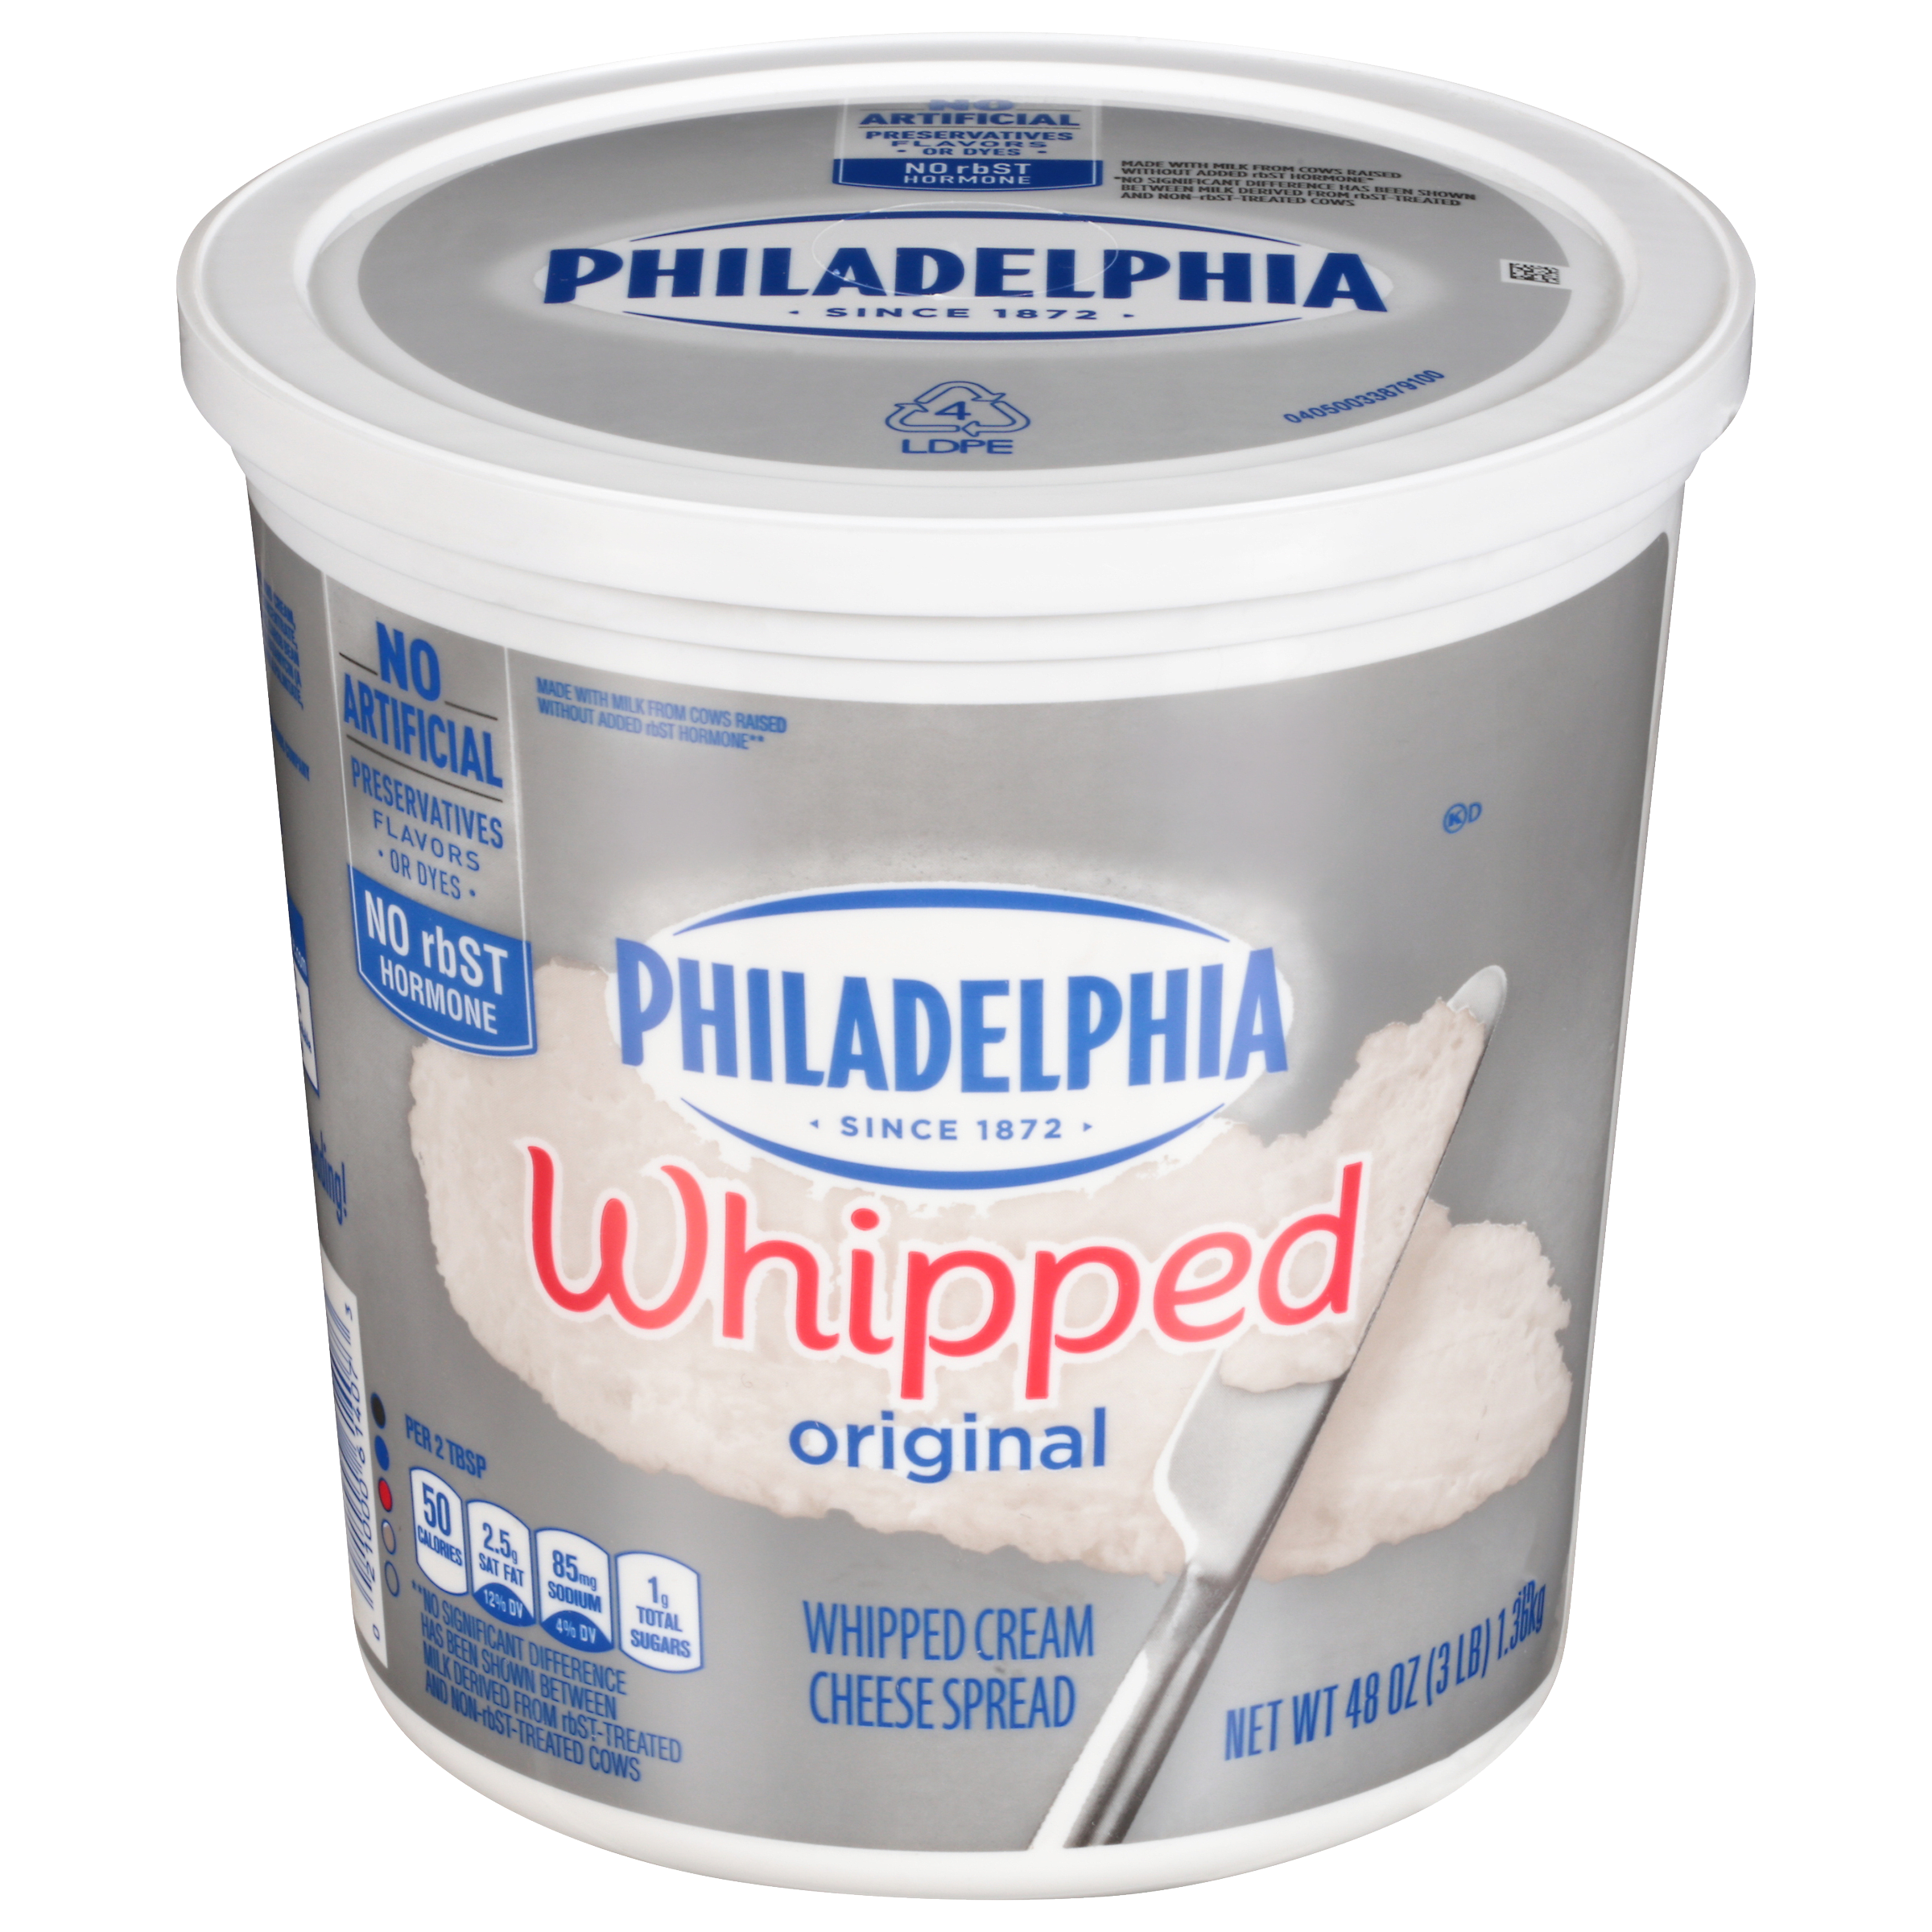 Original Whipped Cream Cheese Spread